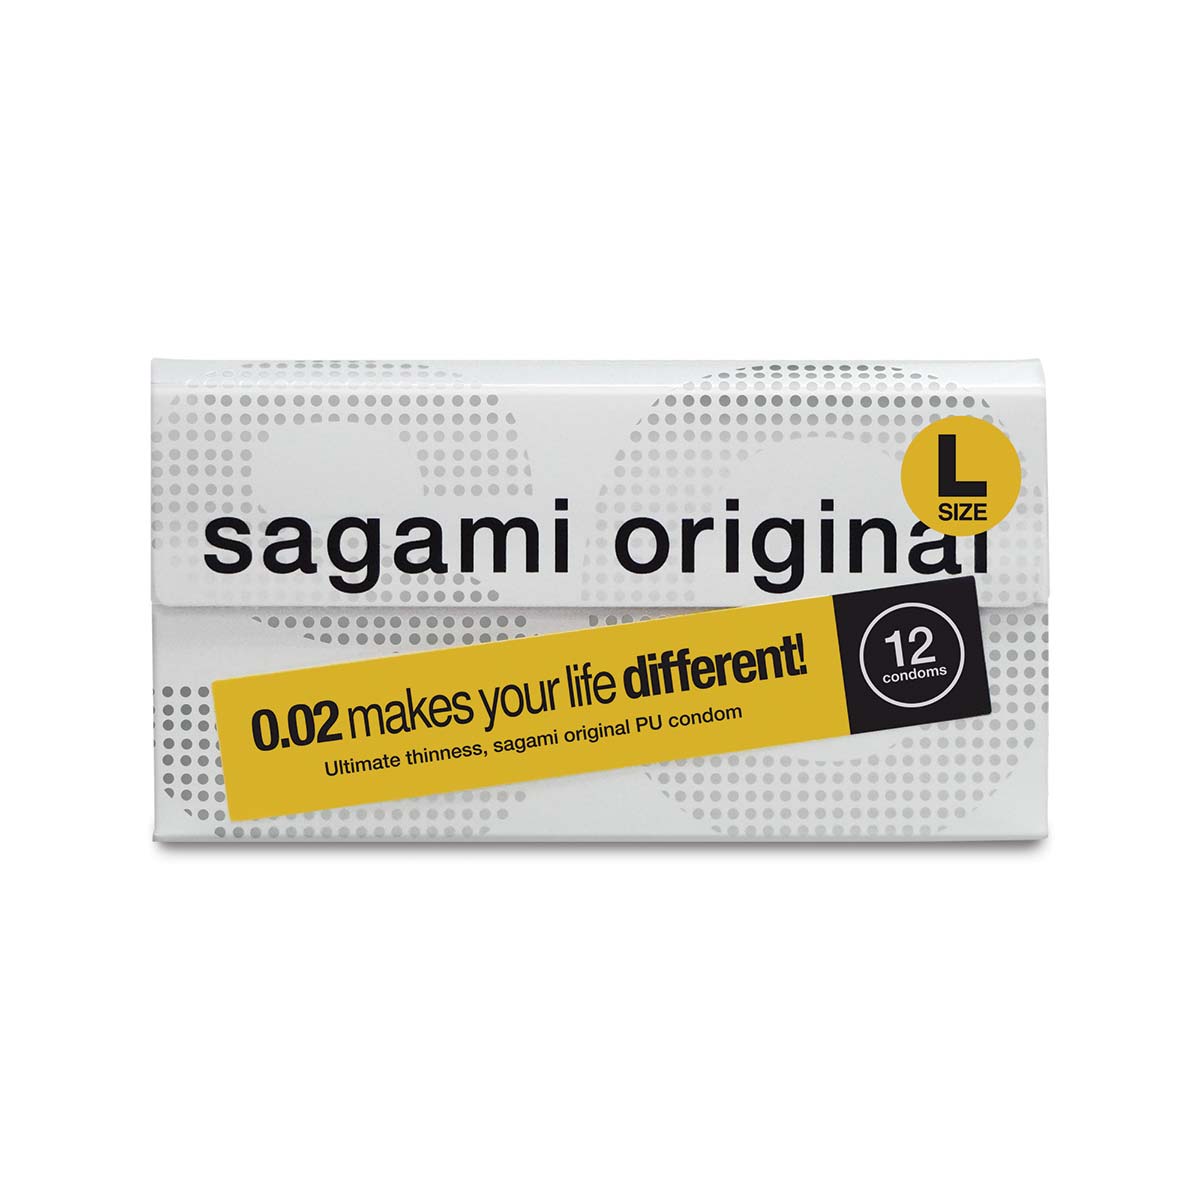 Sagami Original 0.02 Large Size 12s